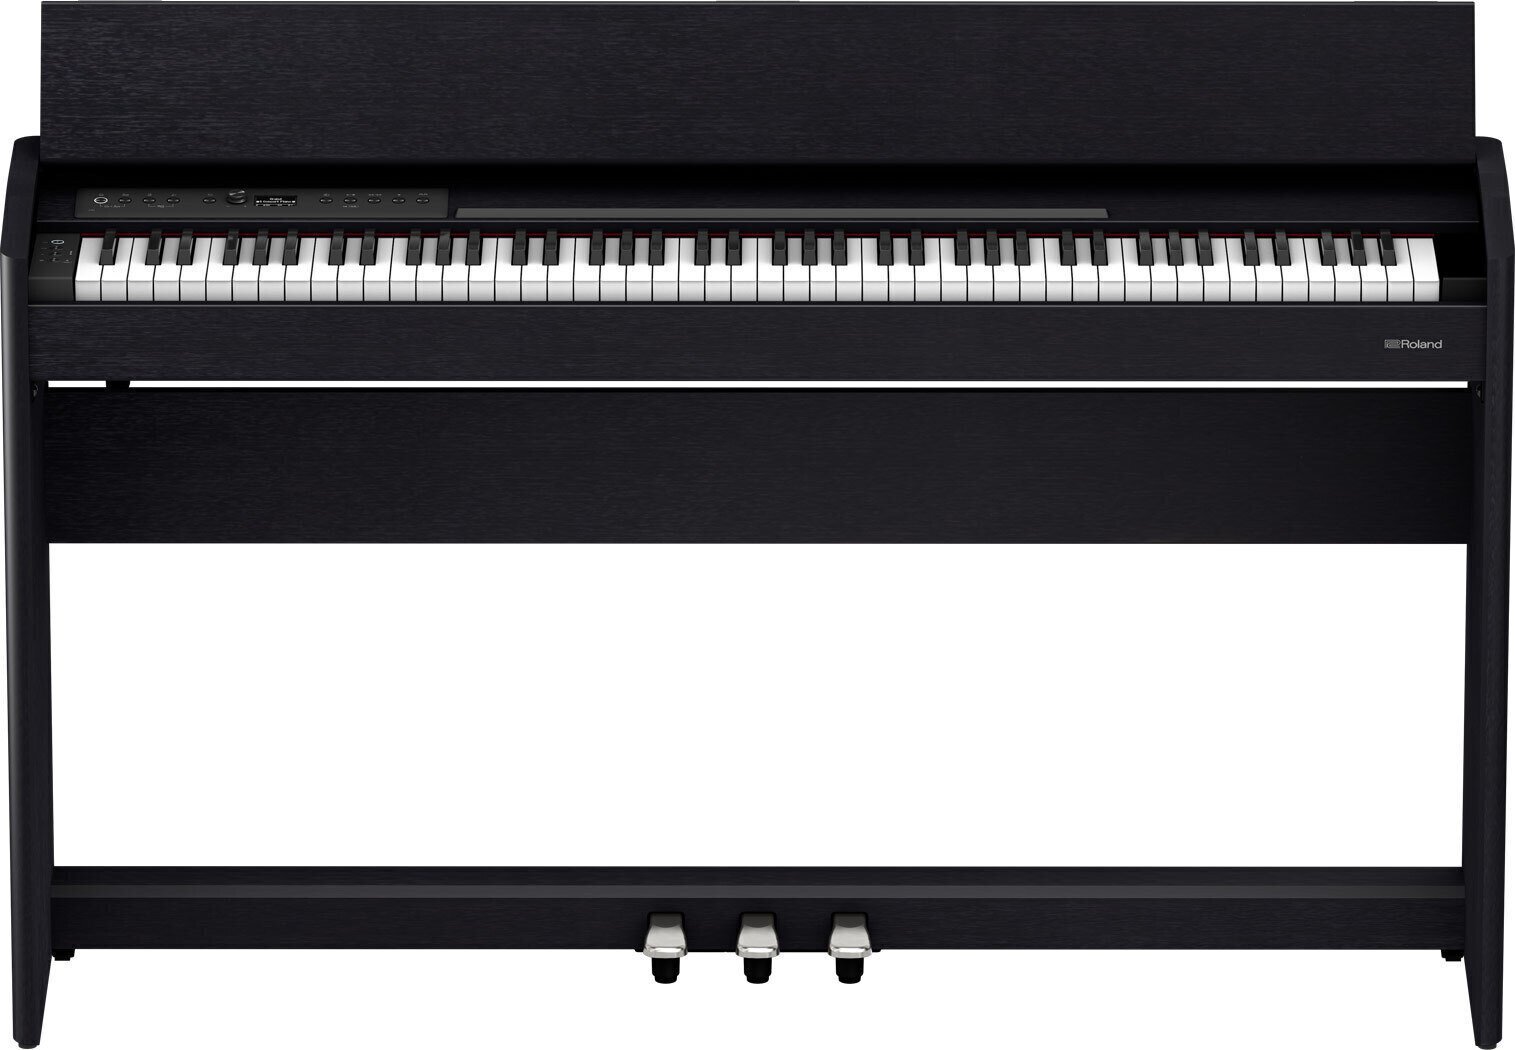 Piano digital Roland F701 Black Piano digital